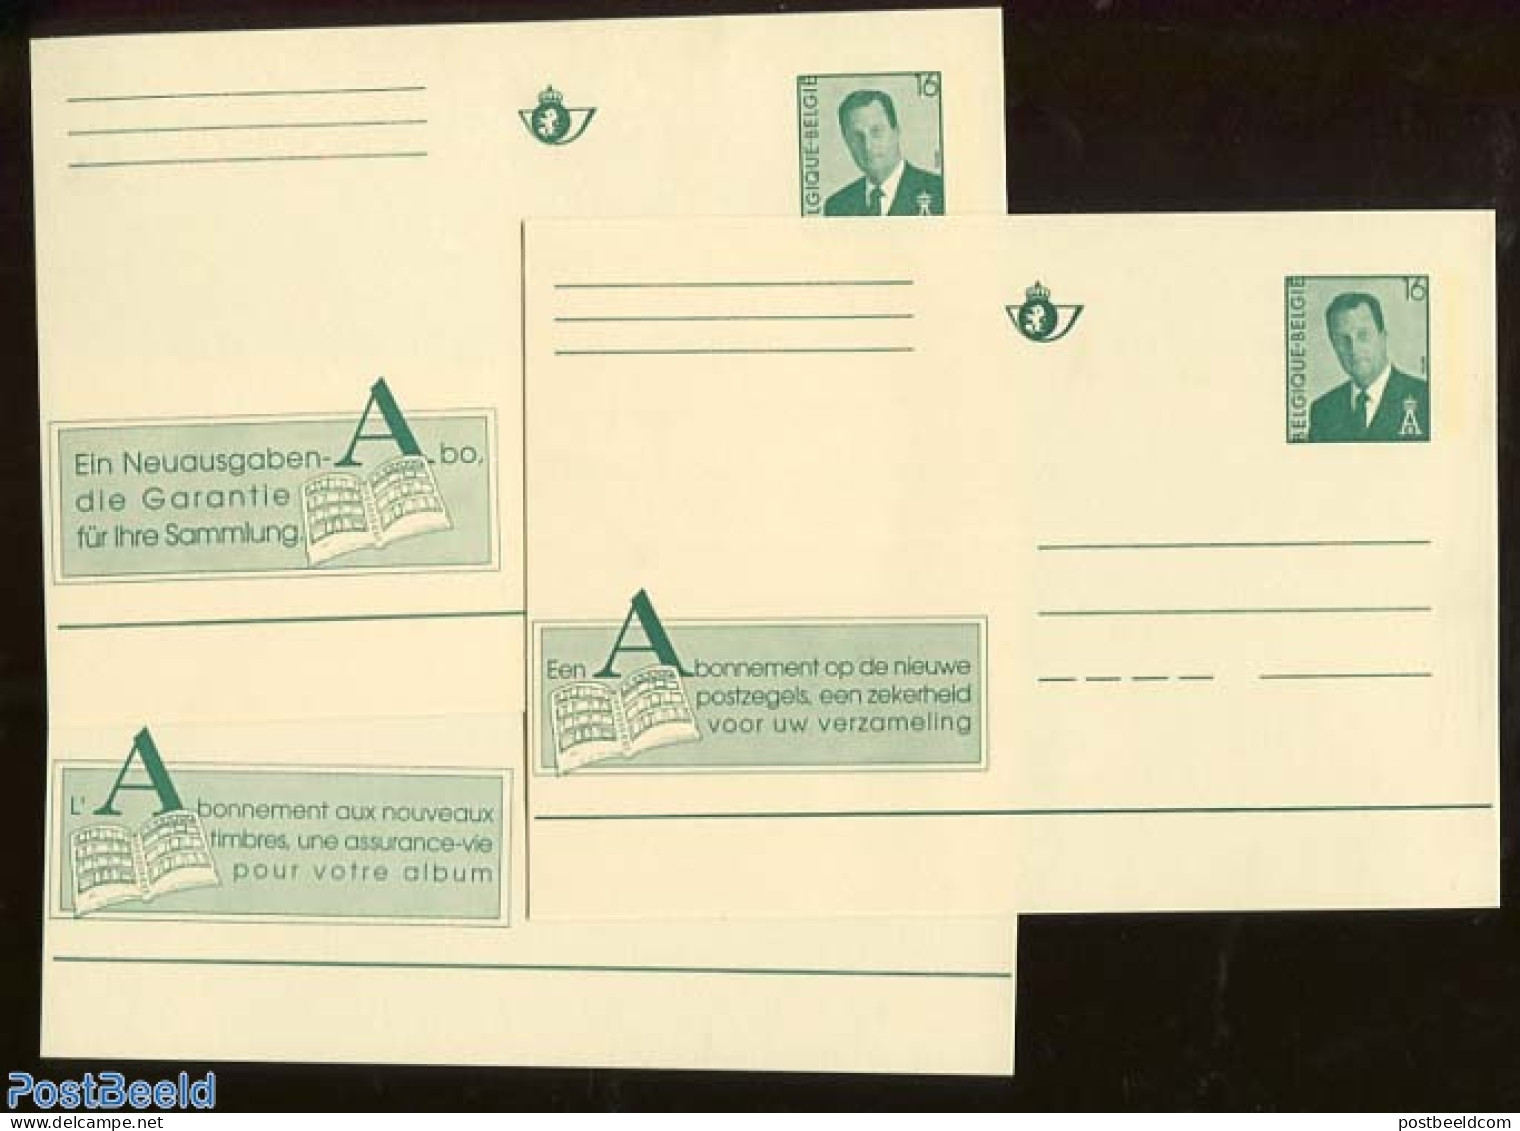 Belgium 1996 Postcard Set, Stamp Subscriptions (3 Cards), Unused Postal Stationary, Philately - Briefe U. Dokumente